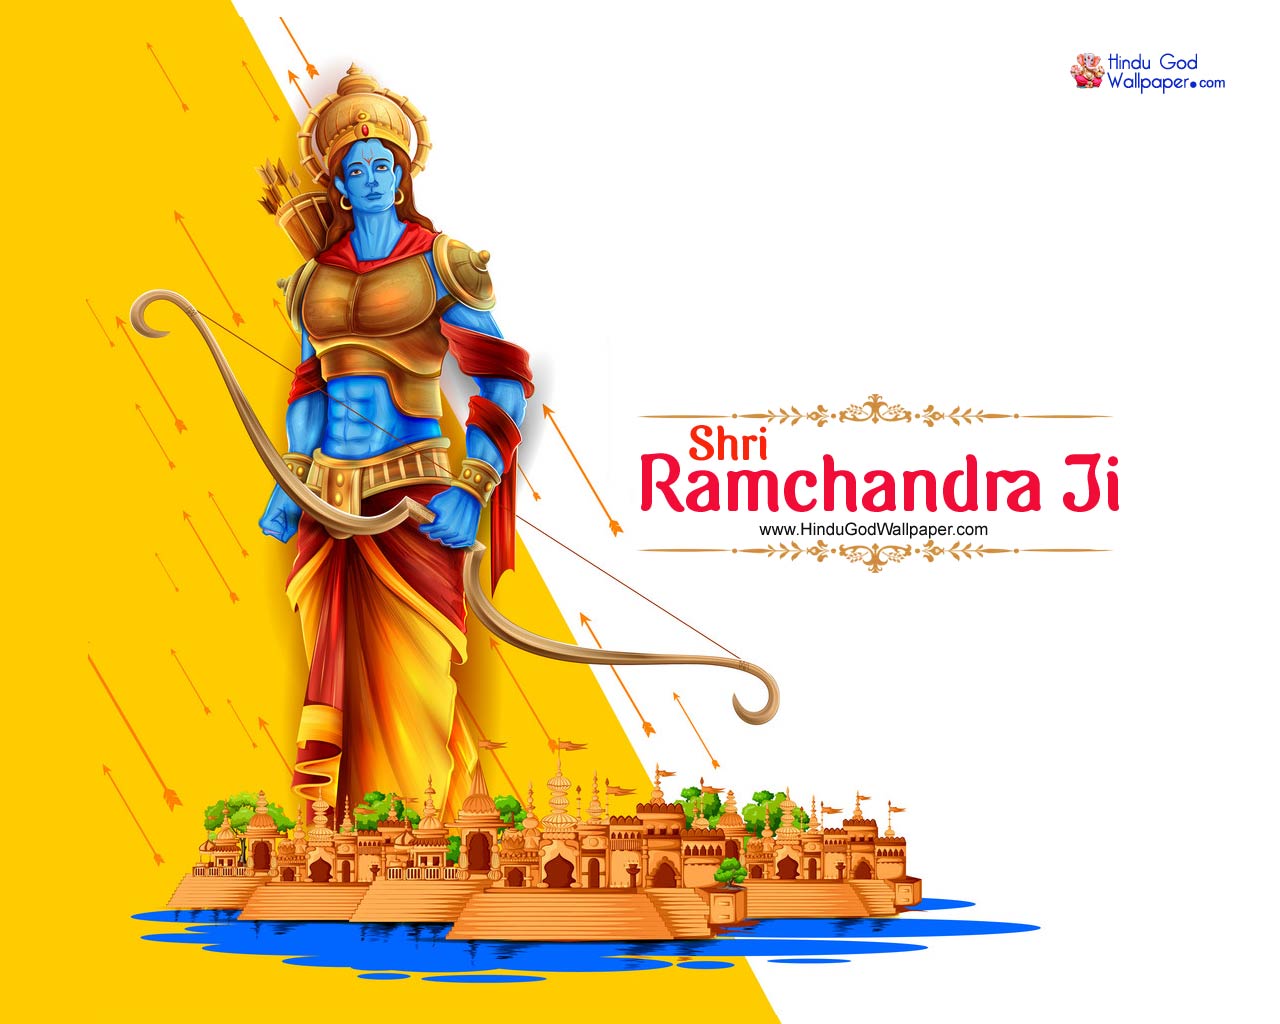 Shri Ramchandra Ji